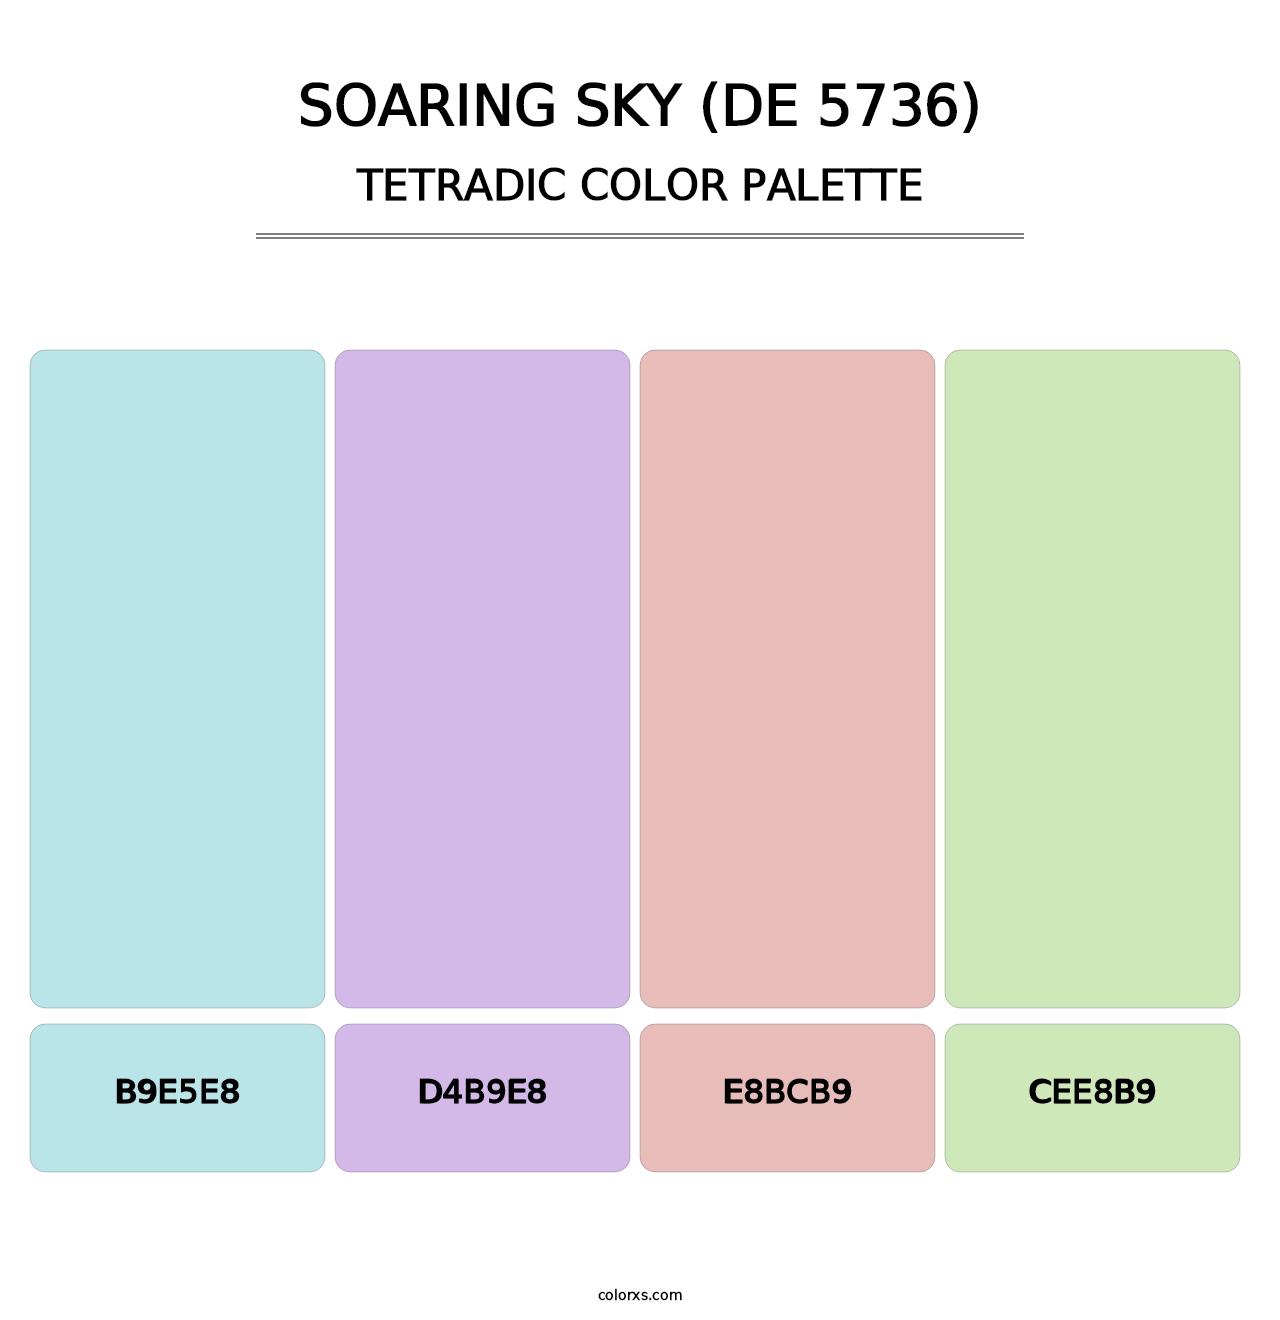 Soaring Sky (DE 5736) - Tetradic Color Palette